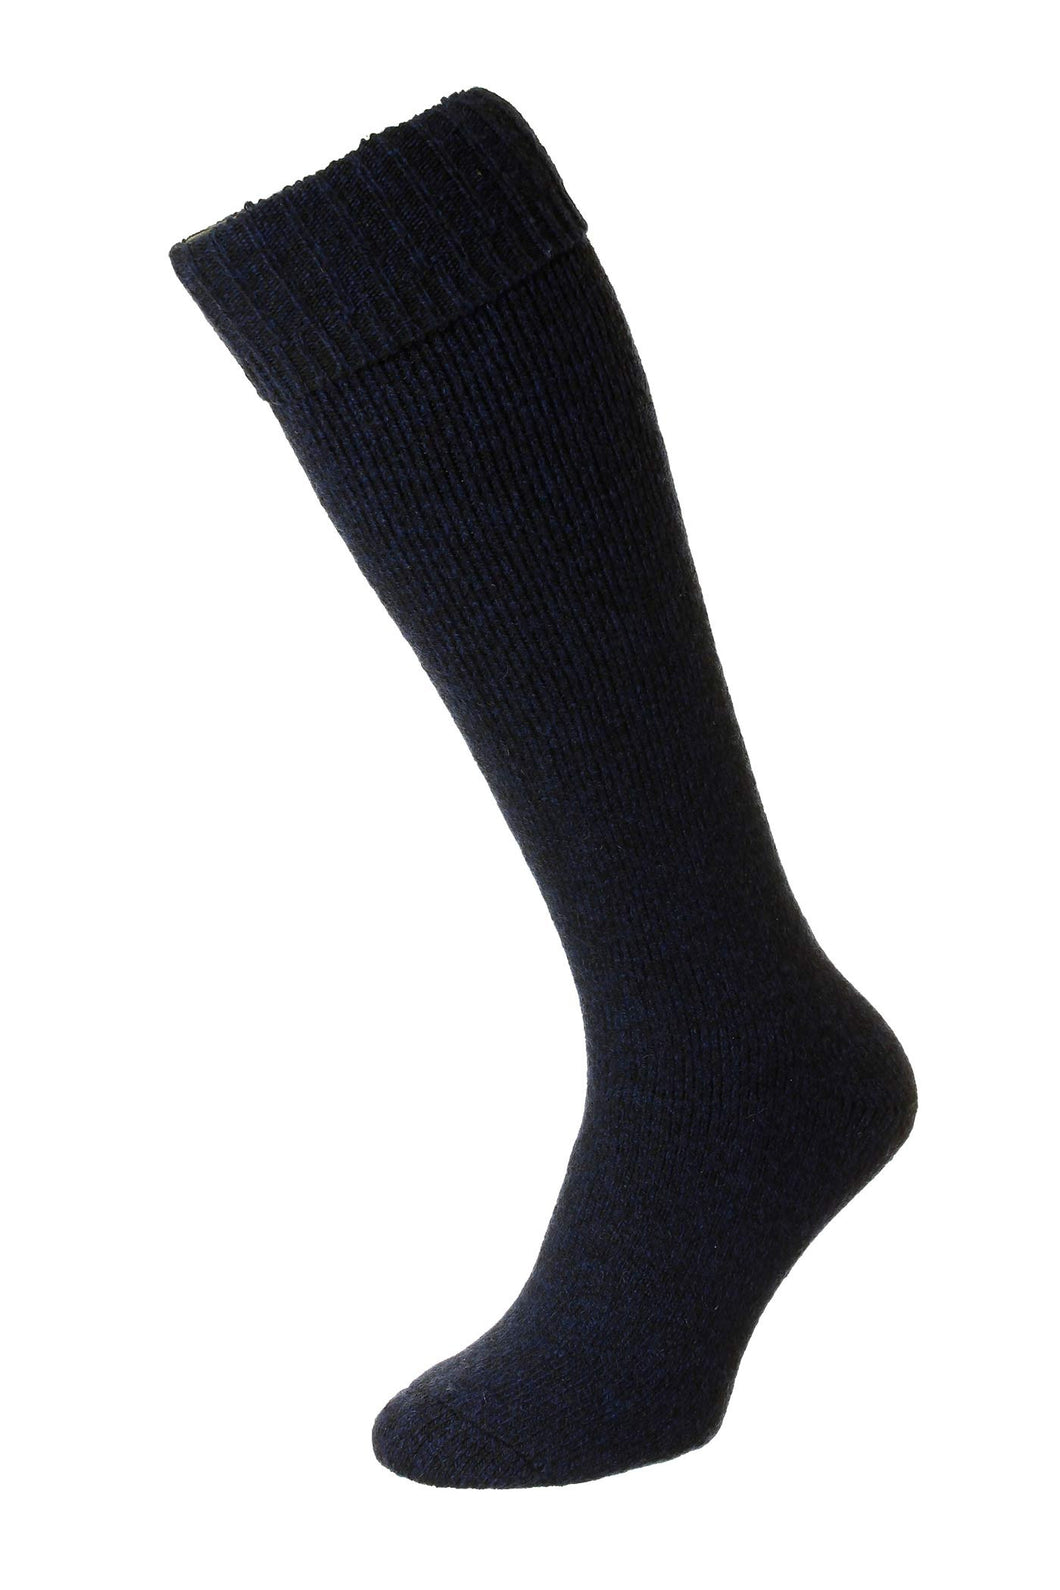 HJ608 Wellington Sock 4-7